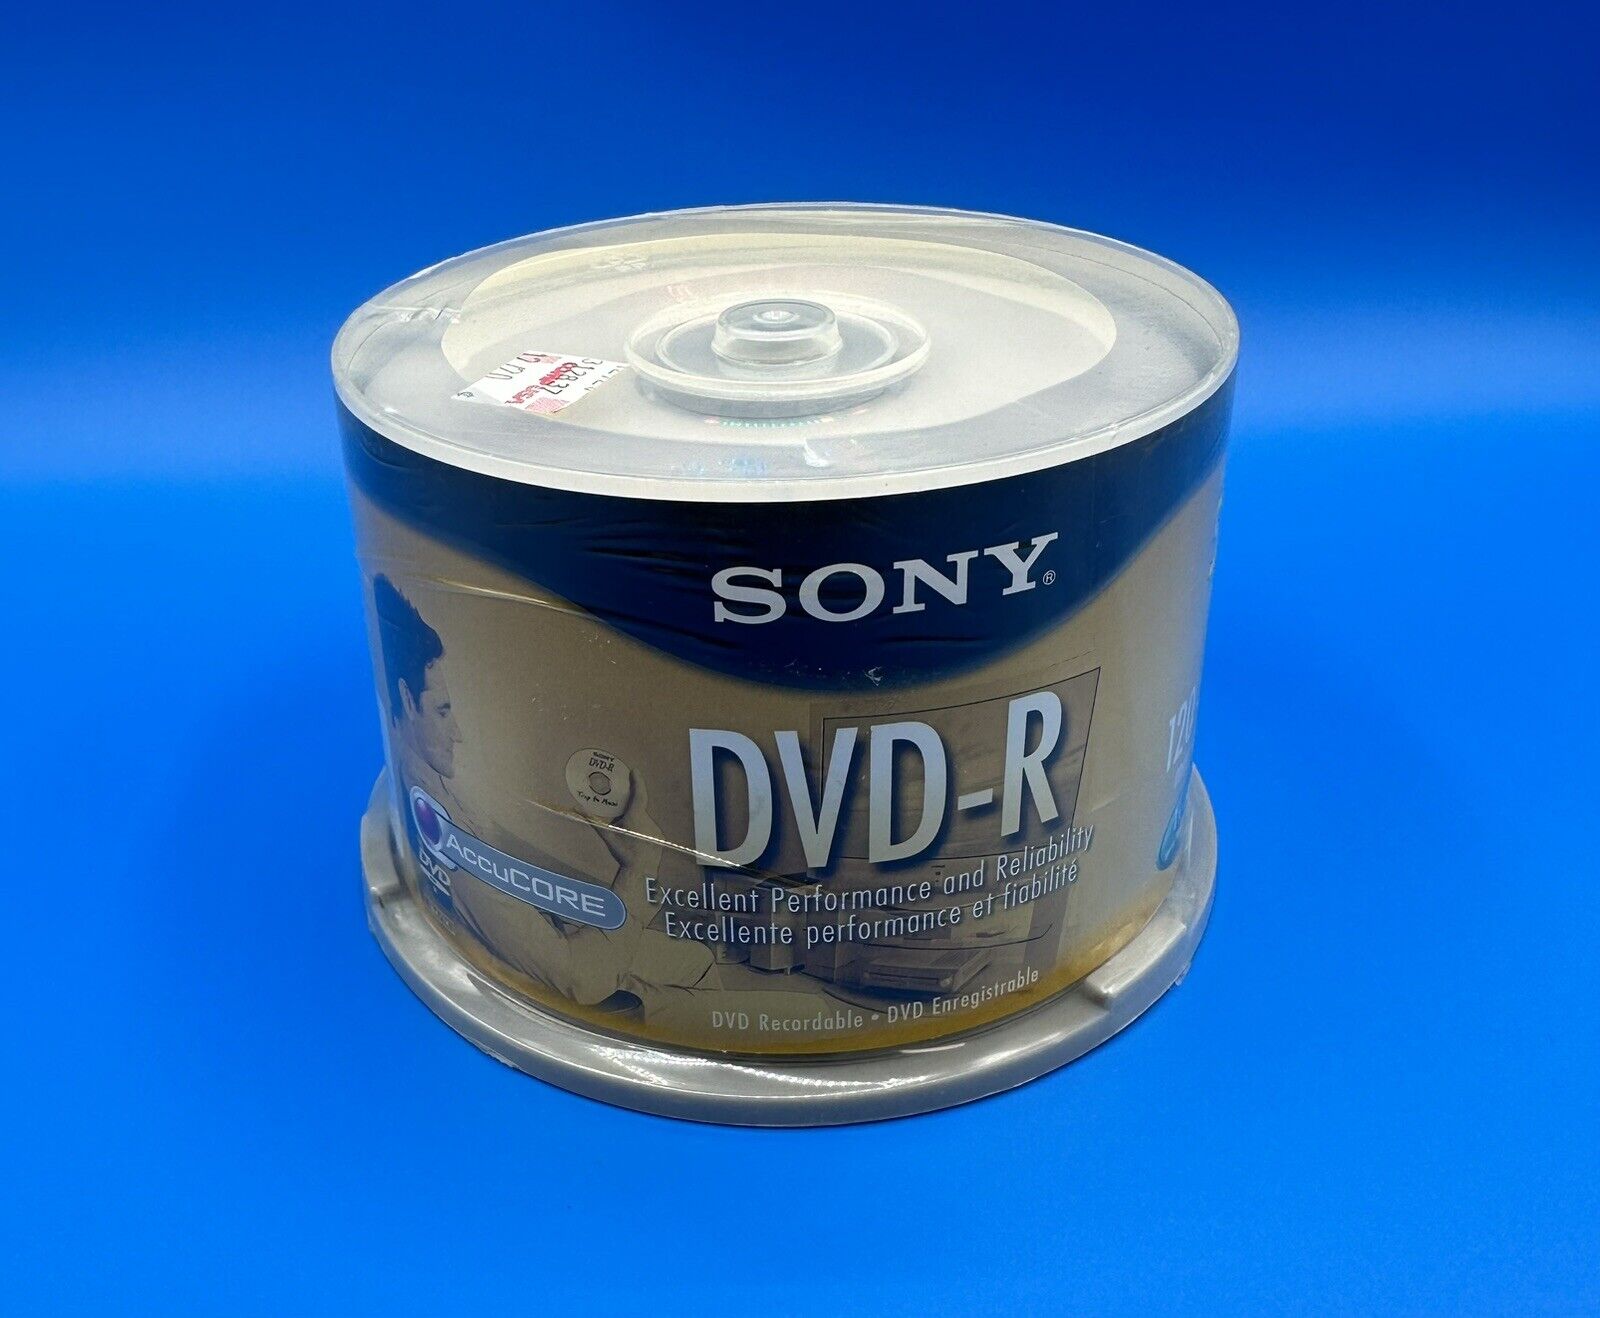 NEW Sony DVD-R 4.7GB 120 Min 1x-16X Blank Media Disc 50 Pack - Factory Sealed